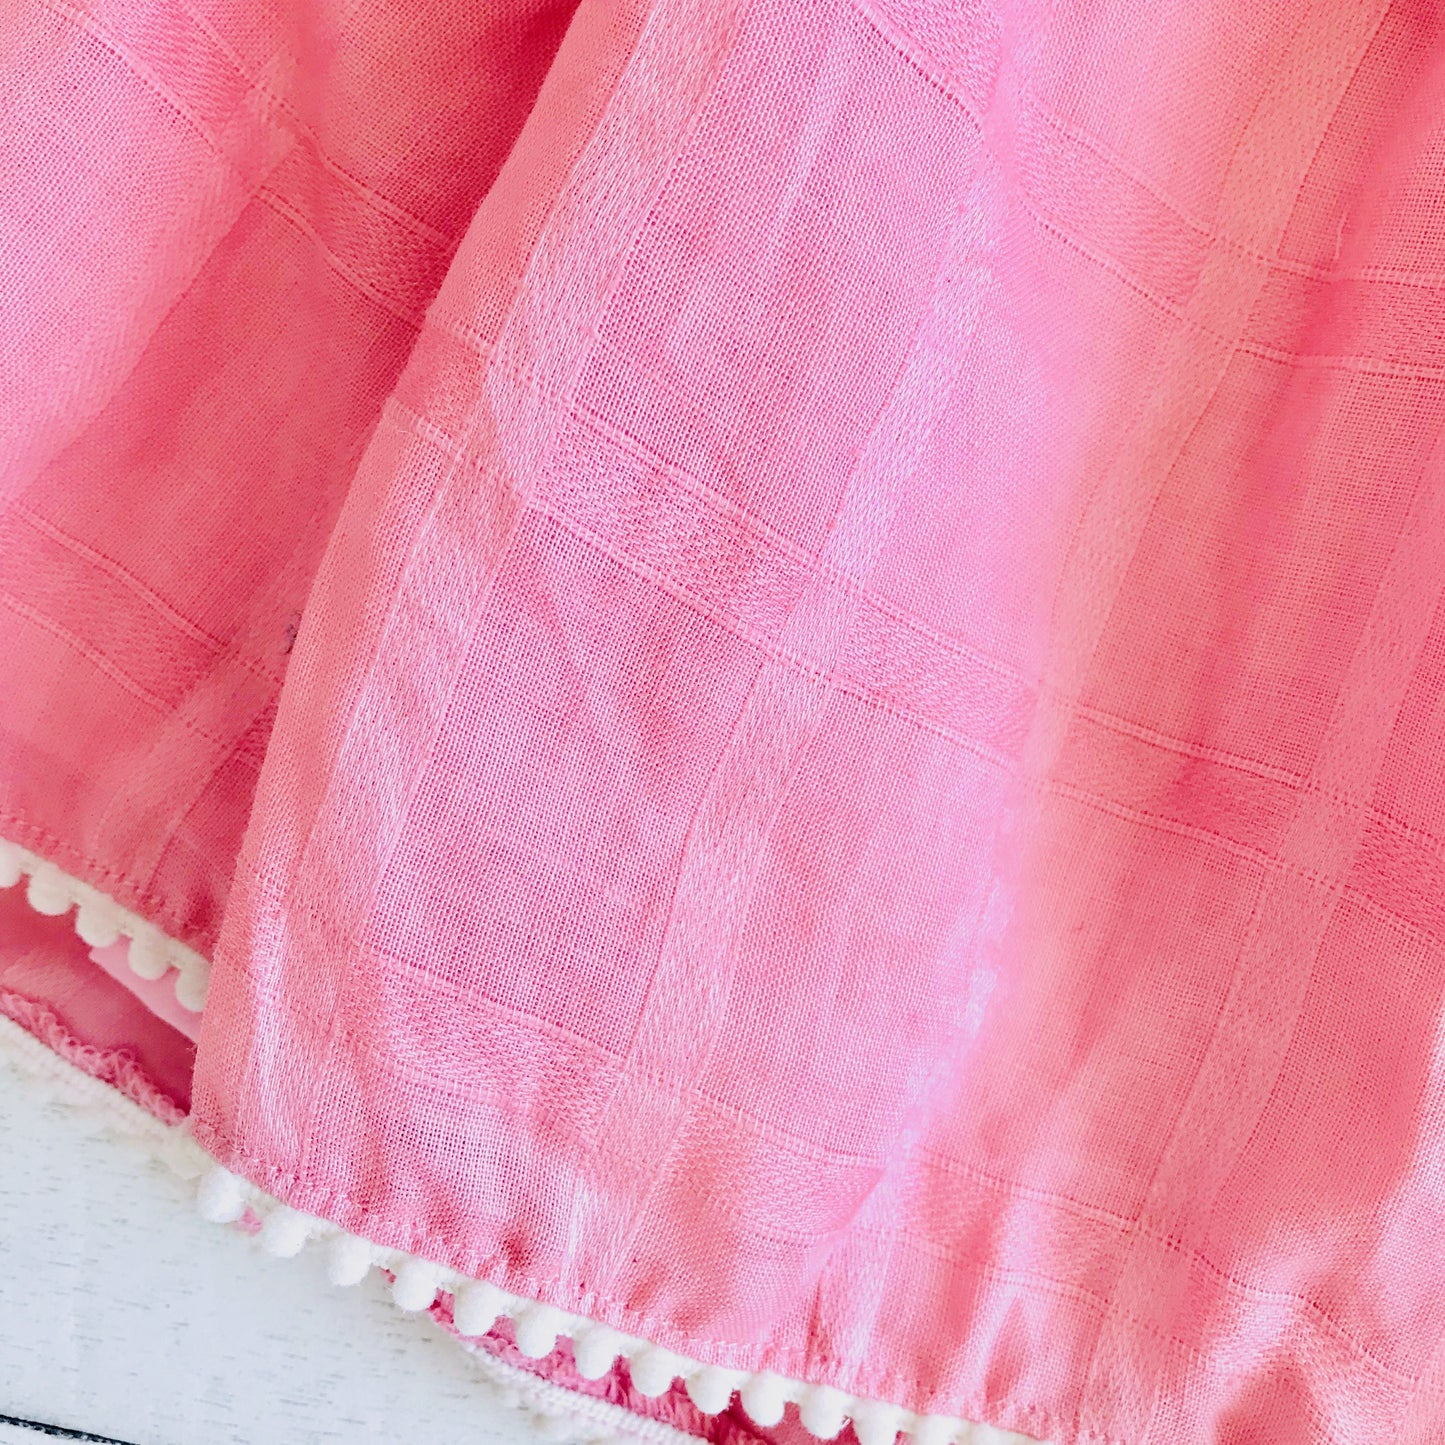 Suntan Dress in Pink Checkered Linen - Lil' Tati